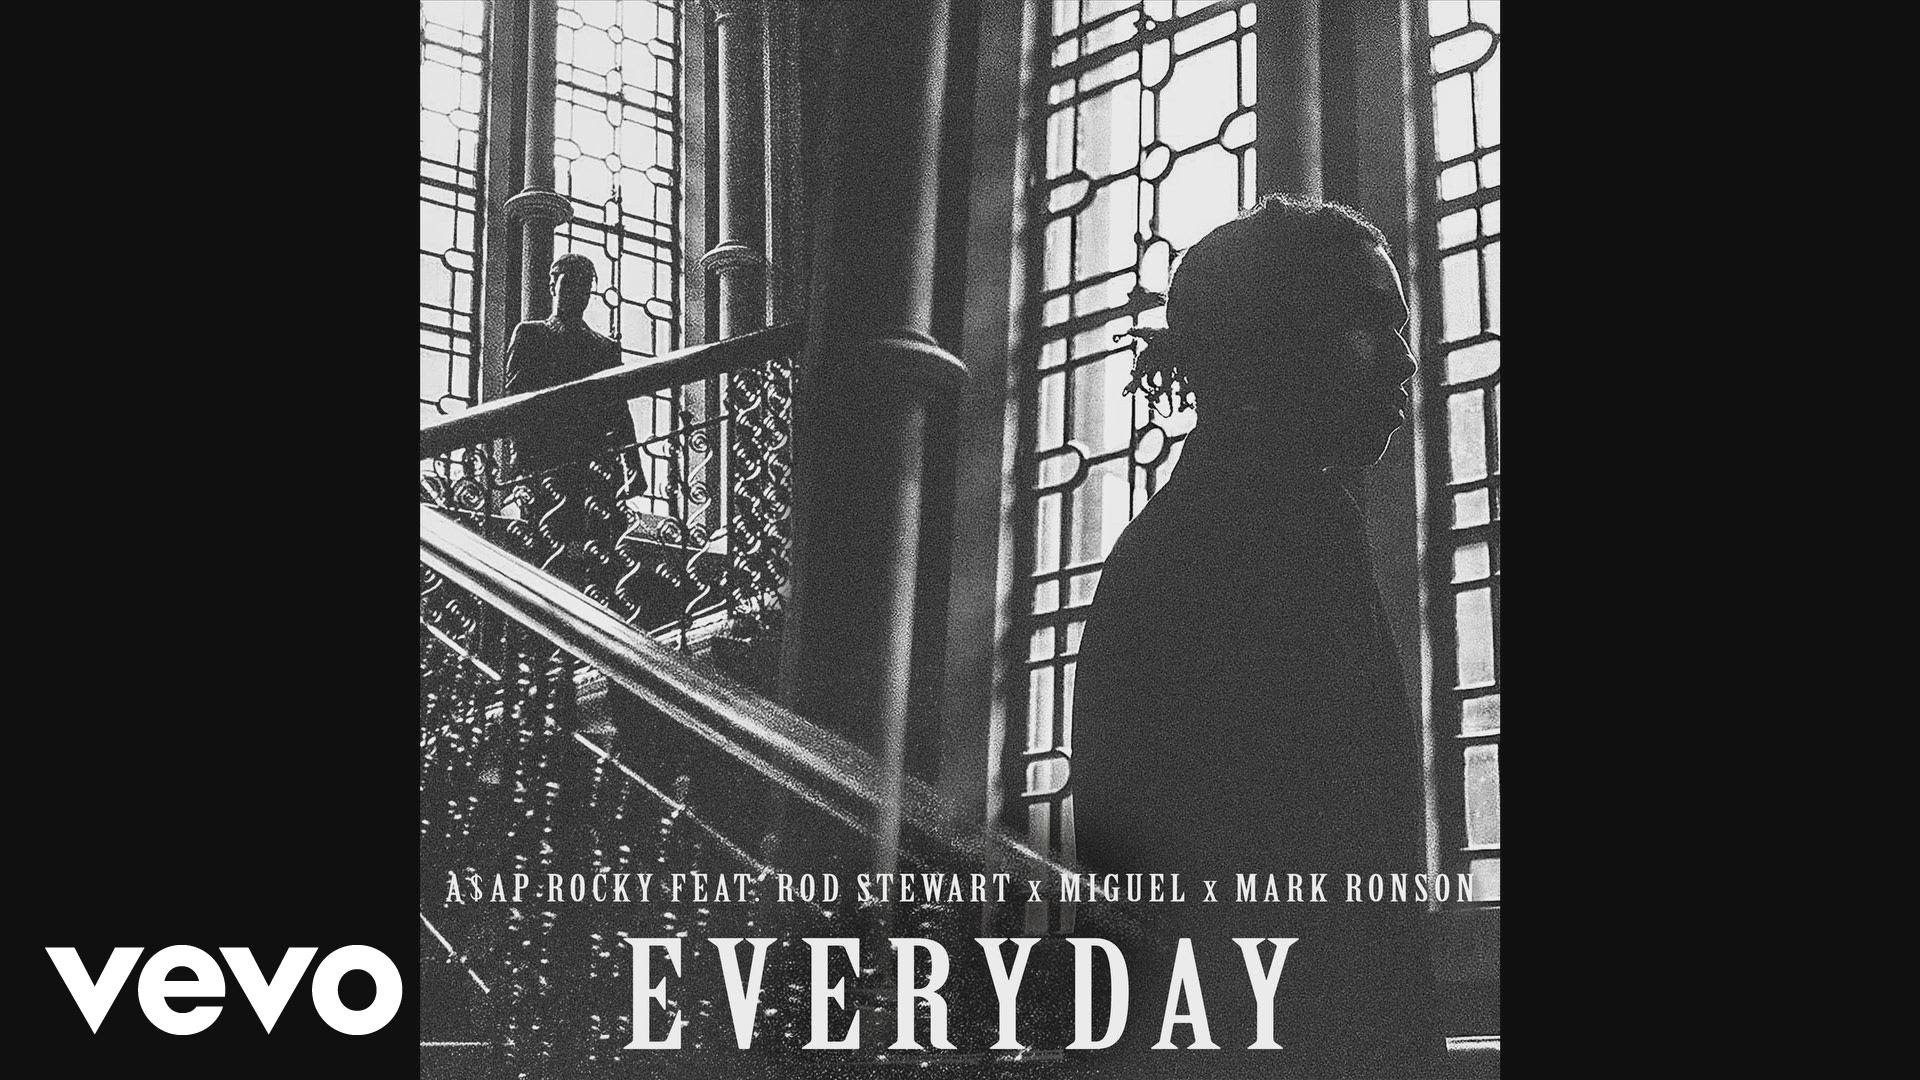 1920x1080 A$AP Rocky - Everyday (Audio) ft. Rod Stewart, Miguel, Mark Ronson